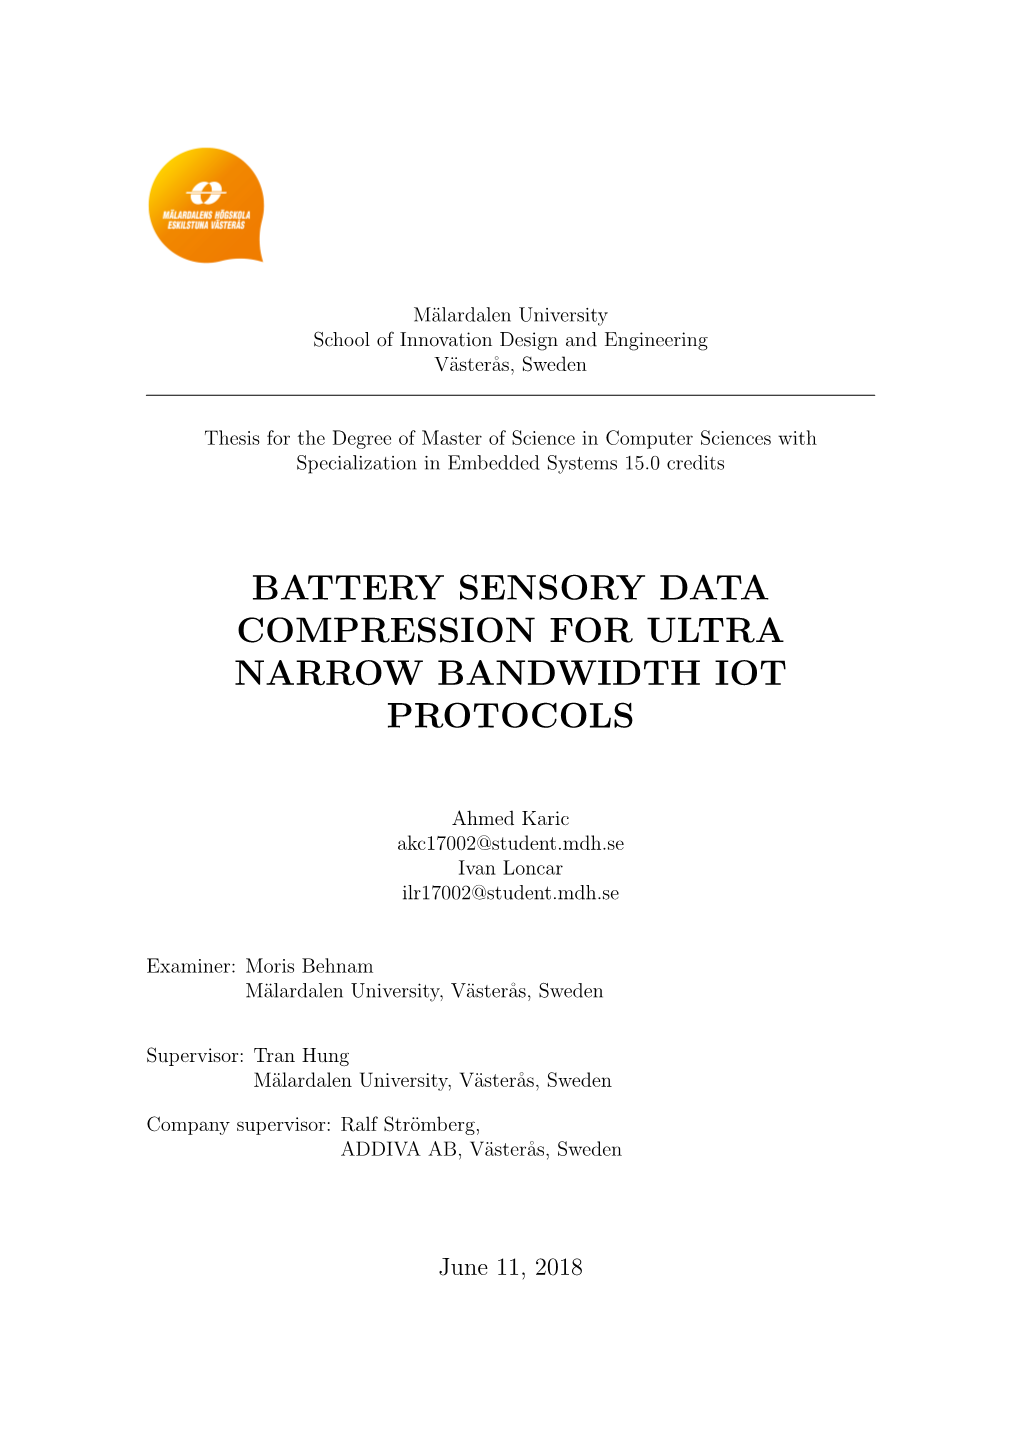 Battery Sensory Data Compression for Ultra Narrow Bandwidth Iot Protocols